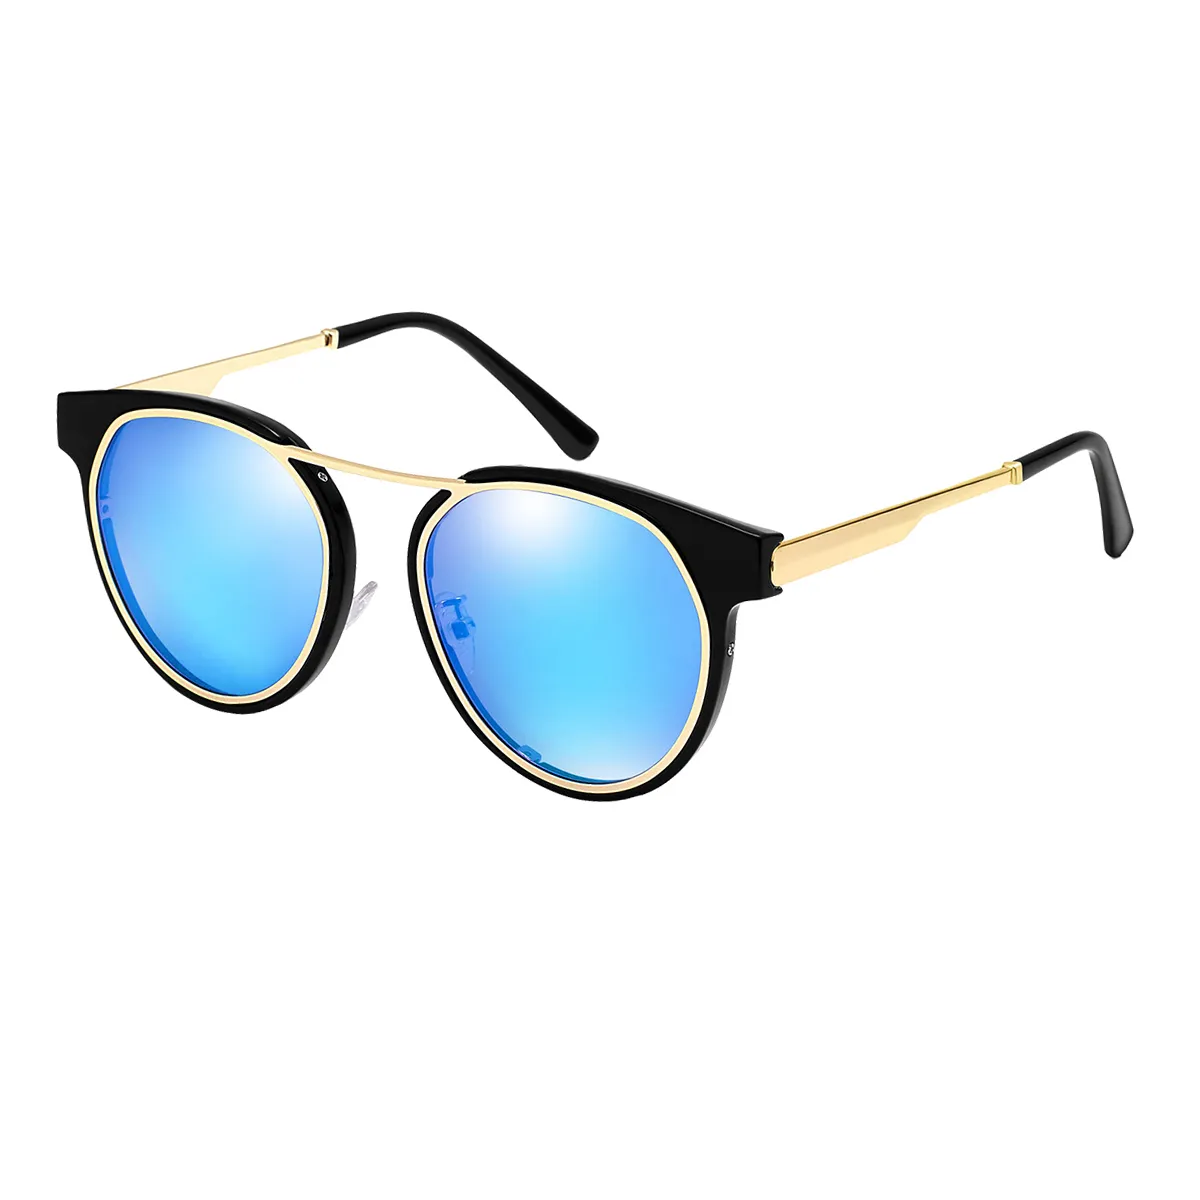 Pritchard - Browline Gold Sunglasses for Men & Women